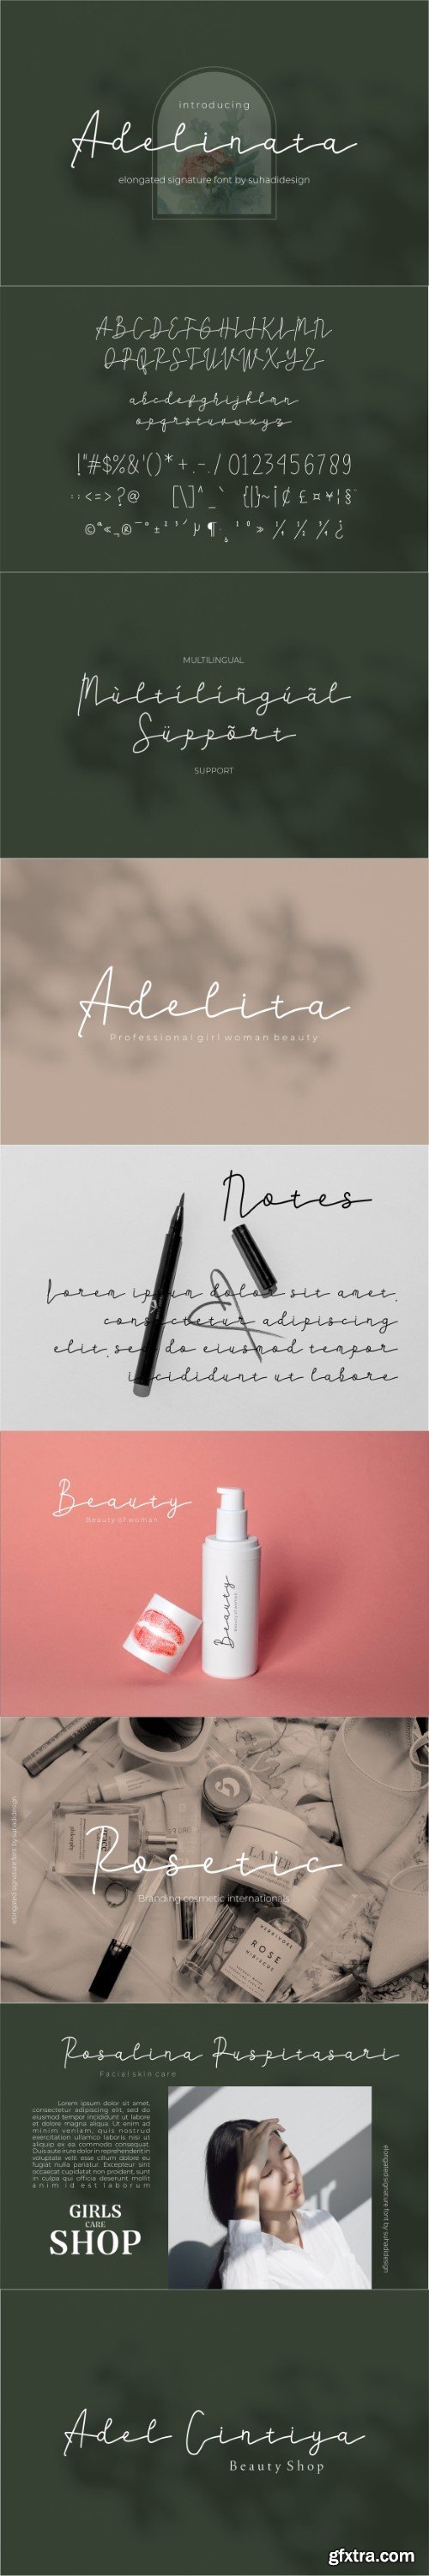 Adelinata - elongated signature font